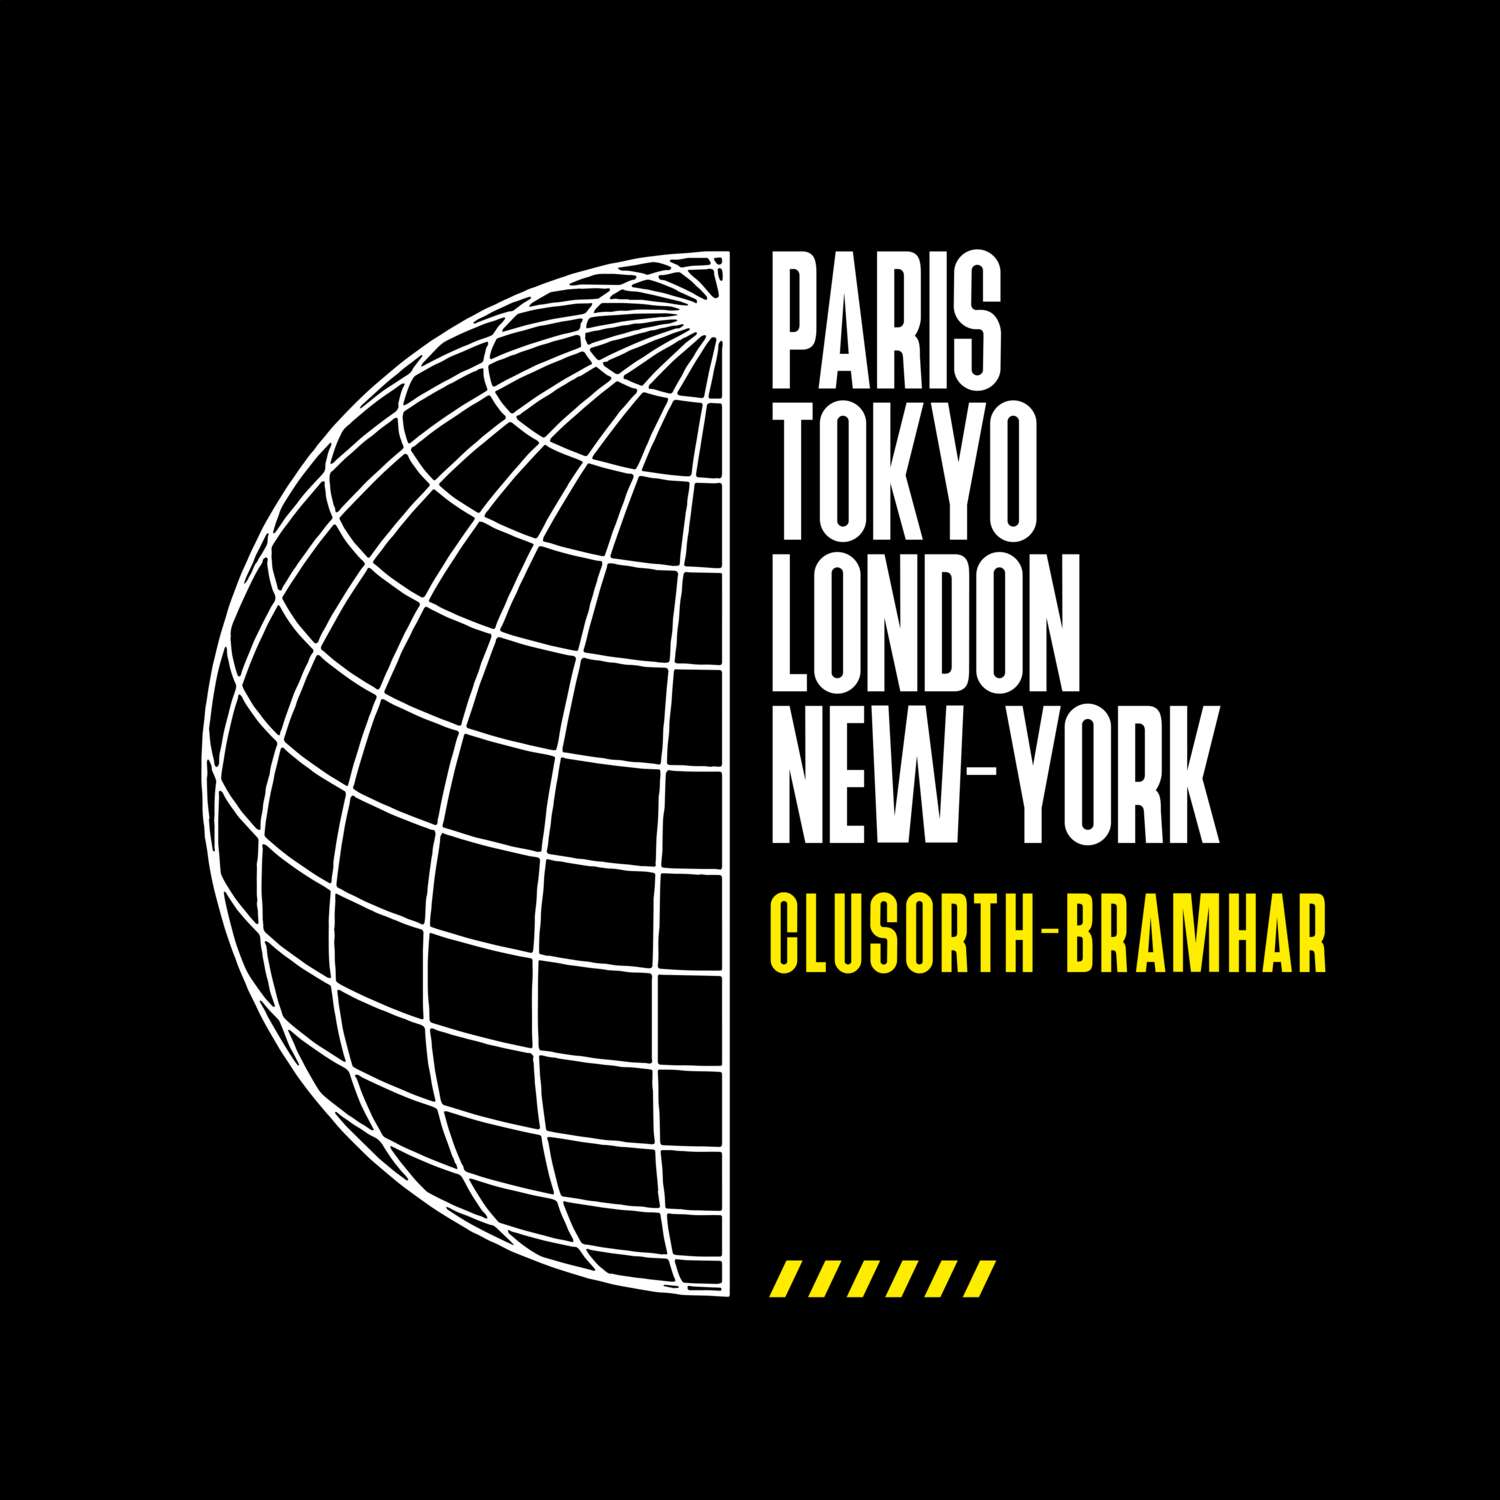 Clusorth-Bramhar T-Shirt »Paris Tokyo London«